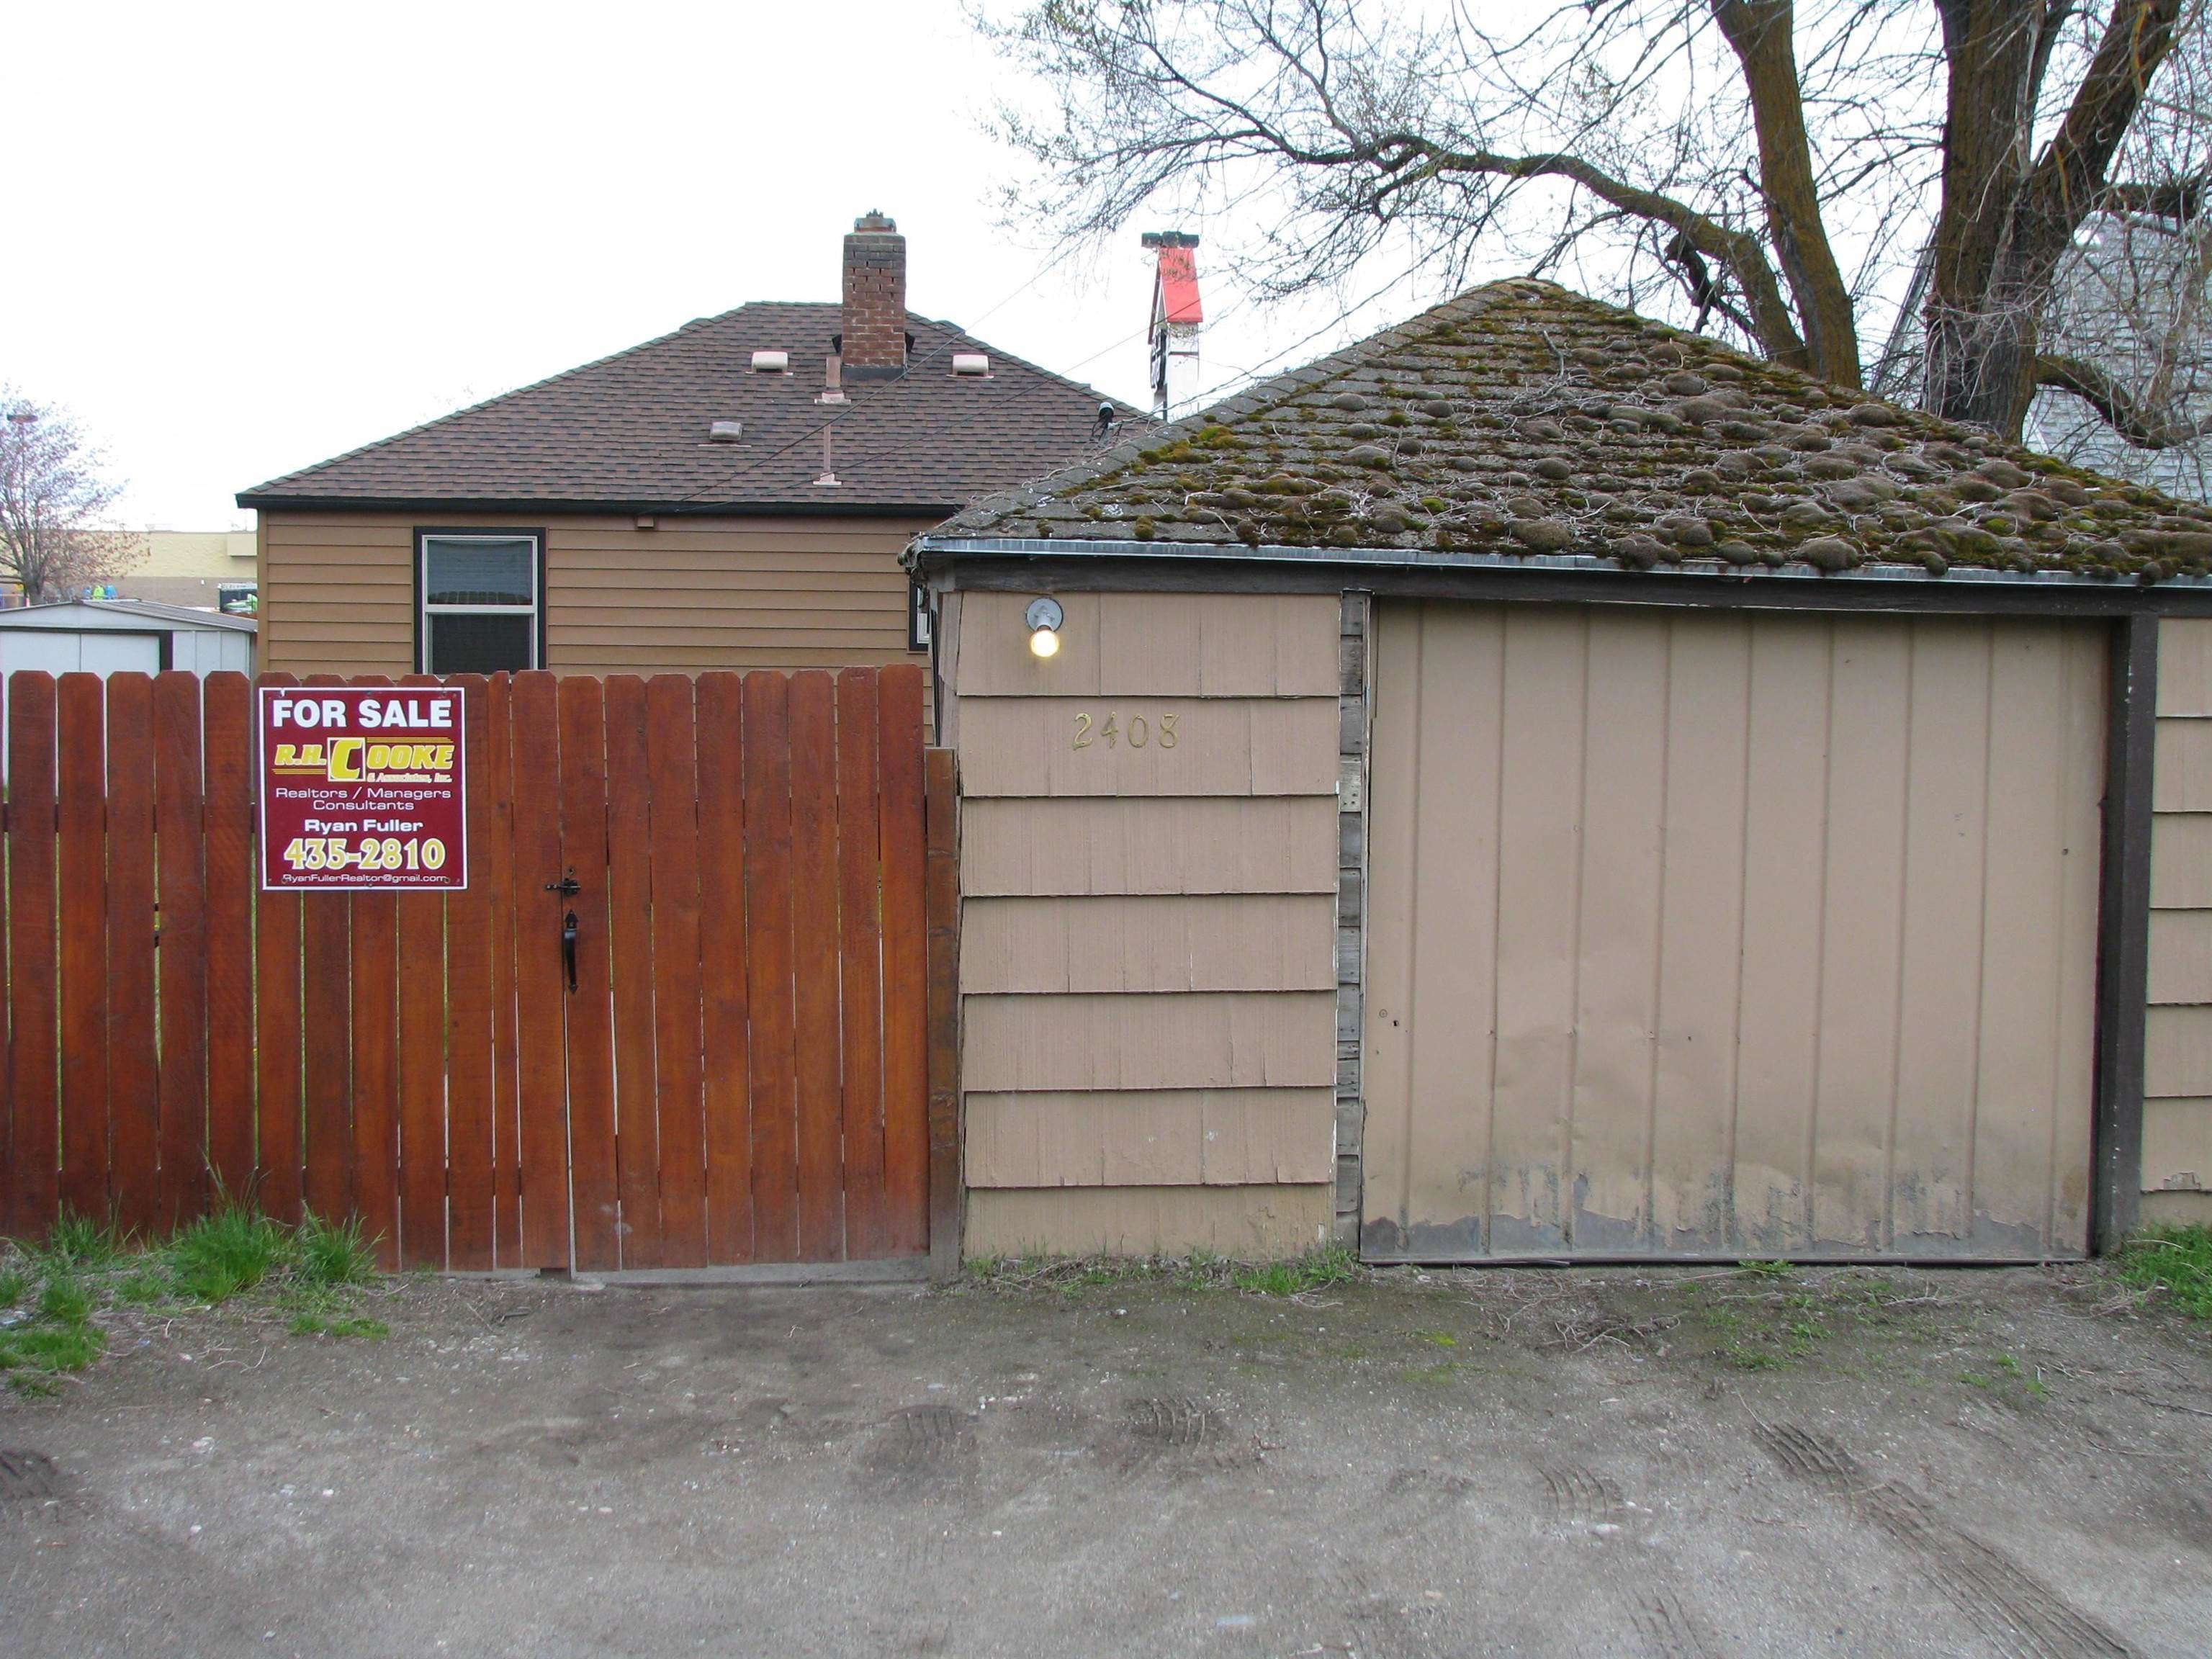 2. Single Family Homes for Sale at 2408 W Wellesley Avenue Spokane, Washington 99205 United States